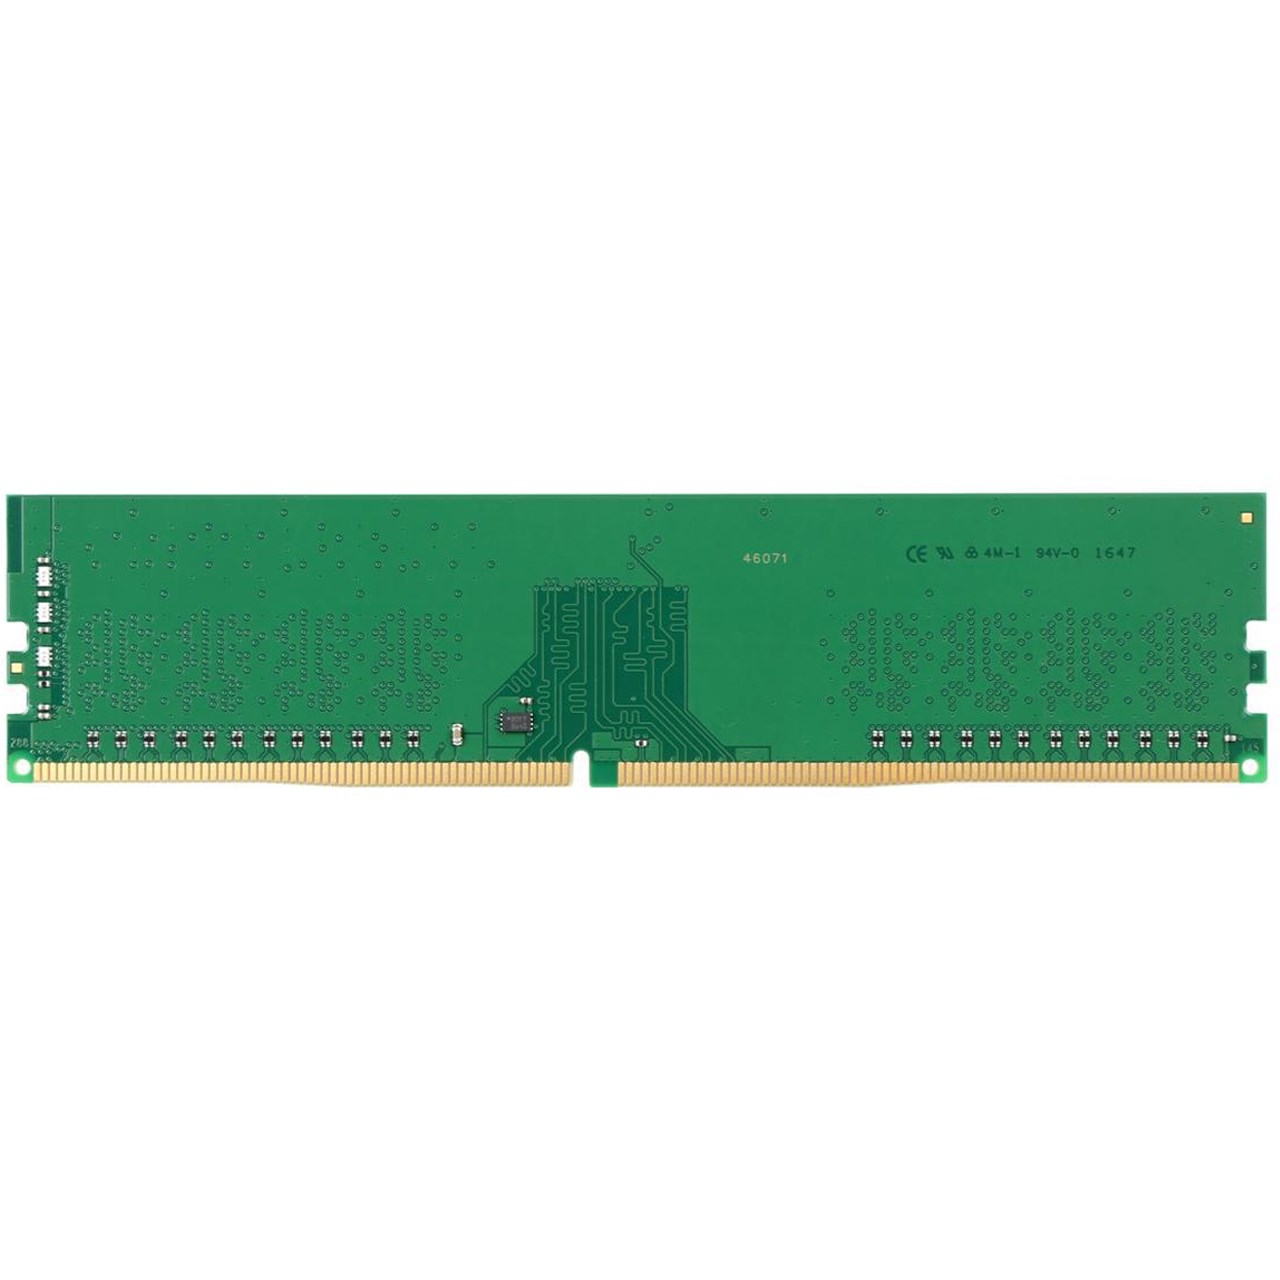 رم دسکتاپ DDR4 دو کاناله 2400 مگاهرتز CL17 کینگستون ظرفیت 8 گیگابایت